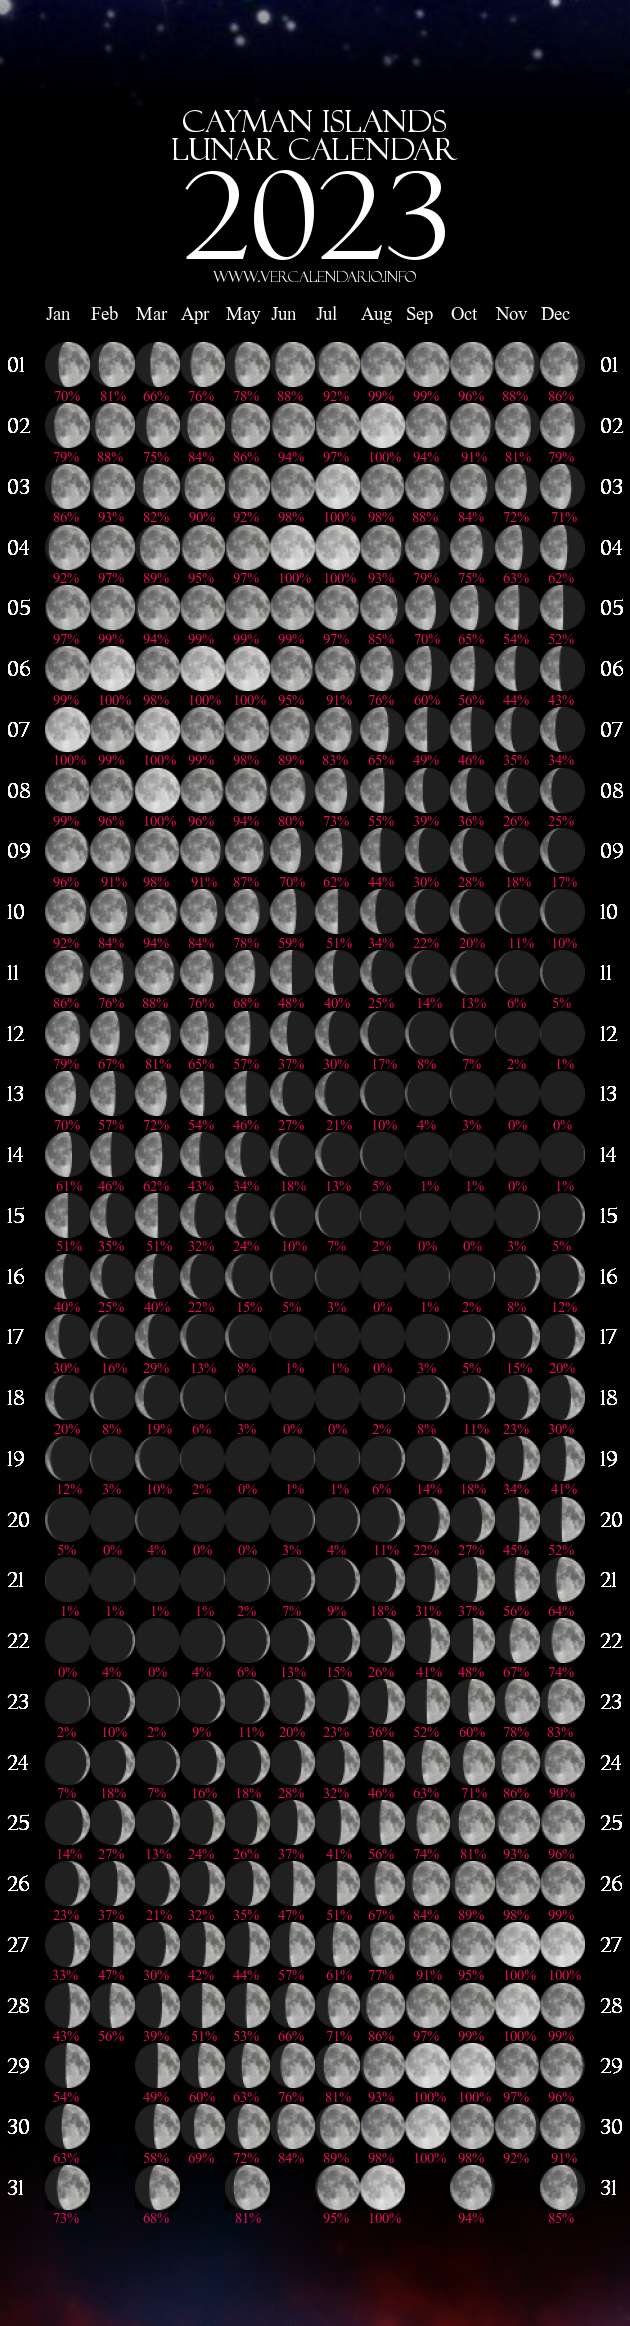 lunar-calendar-2023-usa-printable-calendar-2023